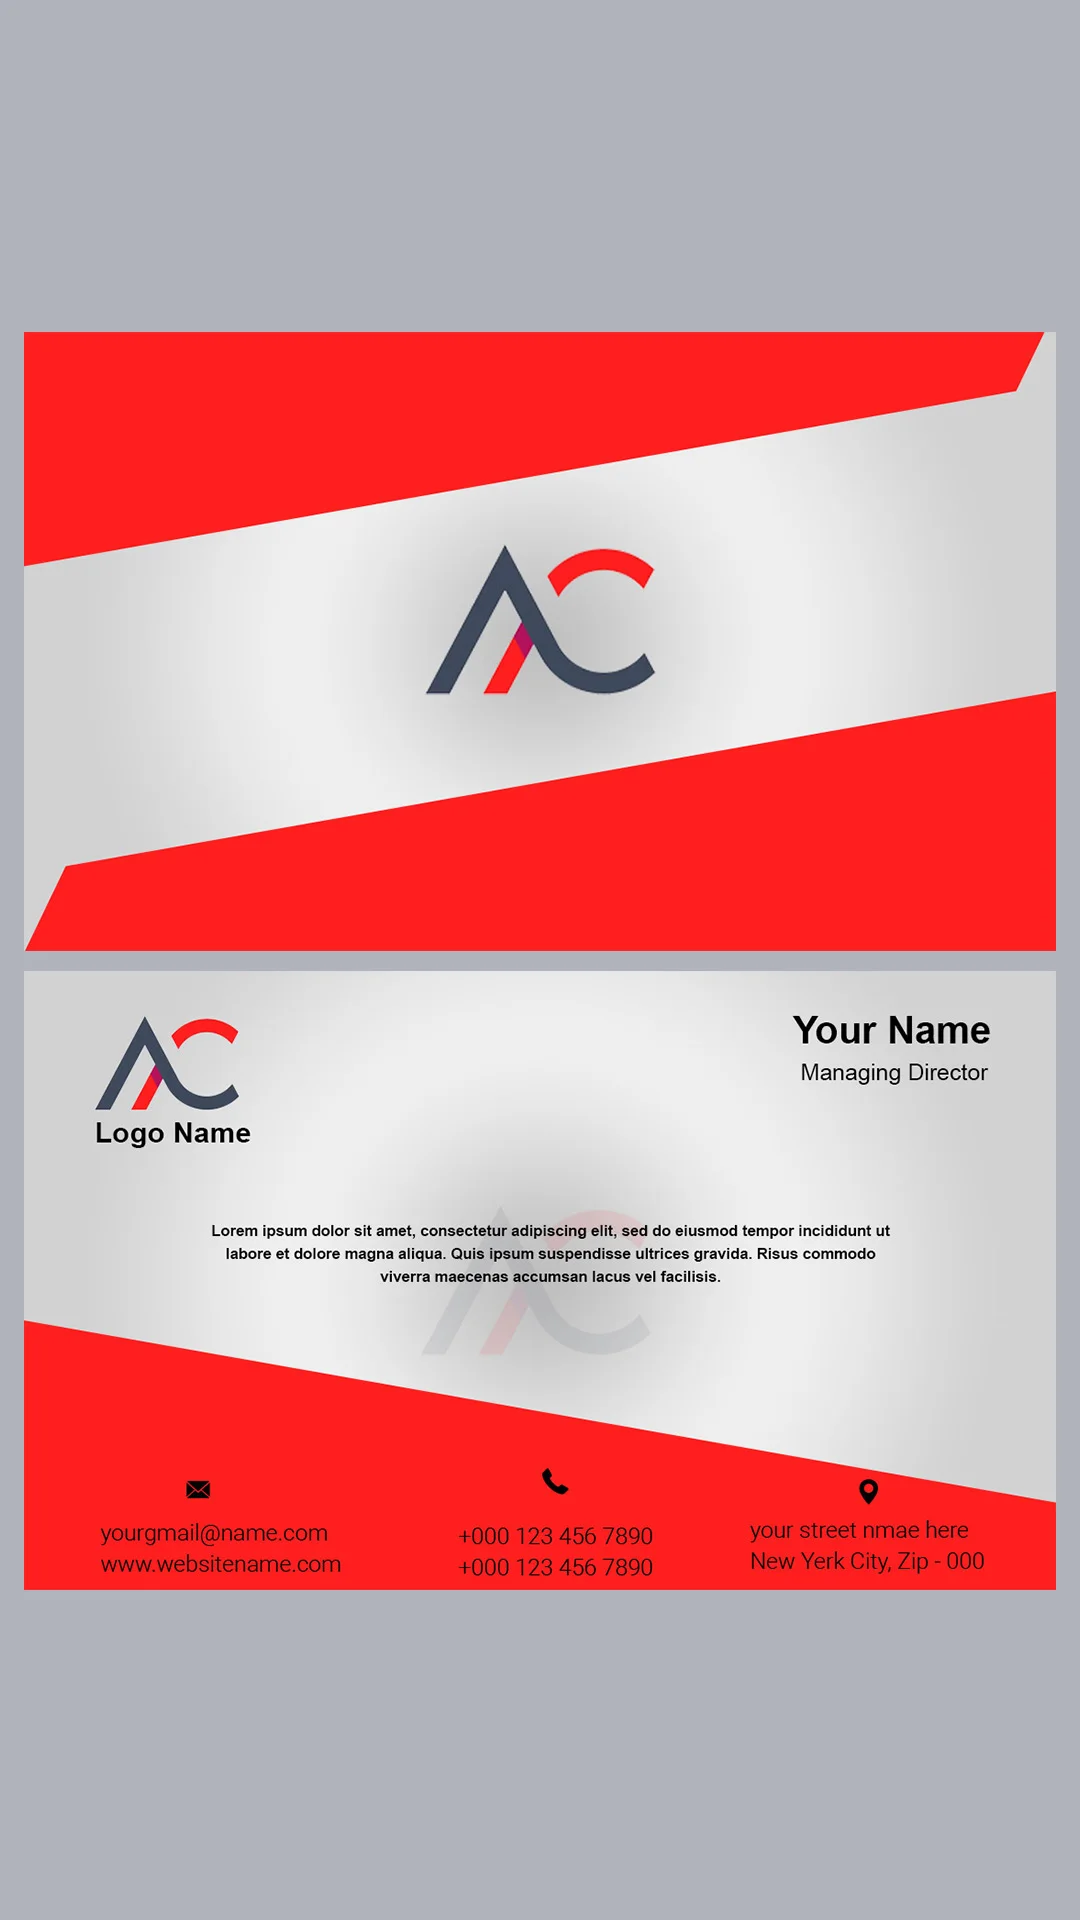 free psd - grey and red background business cards - Digitalposh designer